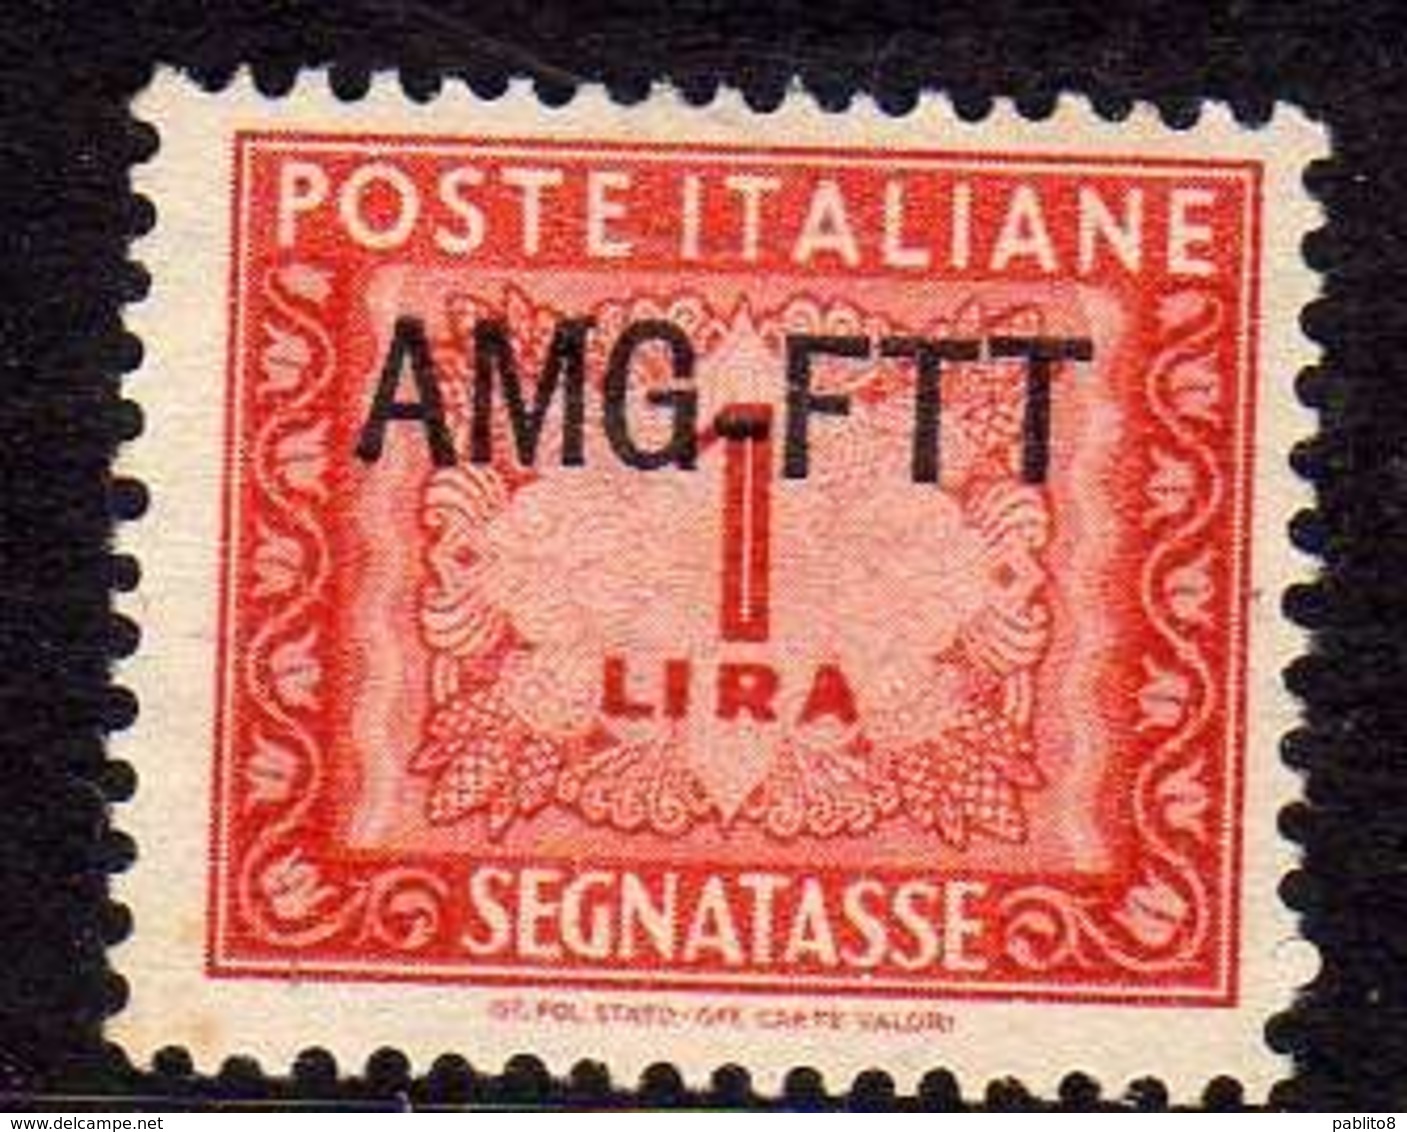 TRIESTE A 1949 1954 AMG-FTT SOPRASTAMPATO D'ITALIA ITALY OVERPRINTED SEGNATASSE POSTAGE DUE TAXES TASSE LIRE 1 MNH - Strafport